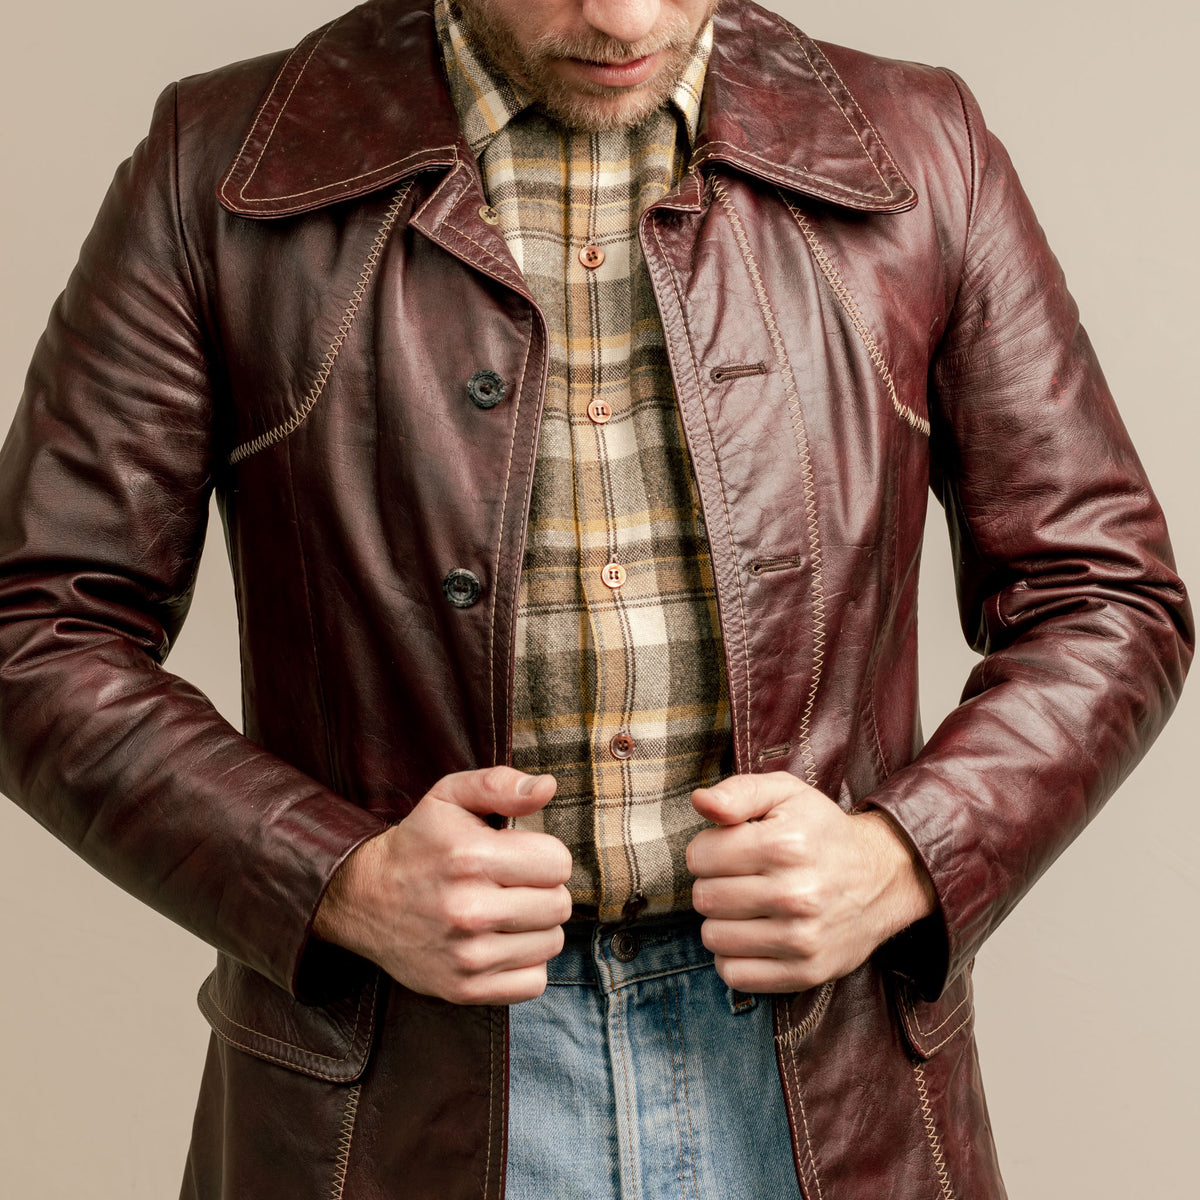 70s vintage Western shirt leather jacket